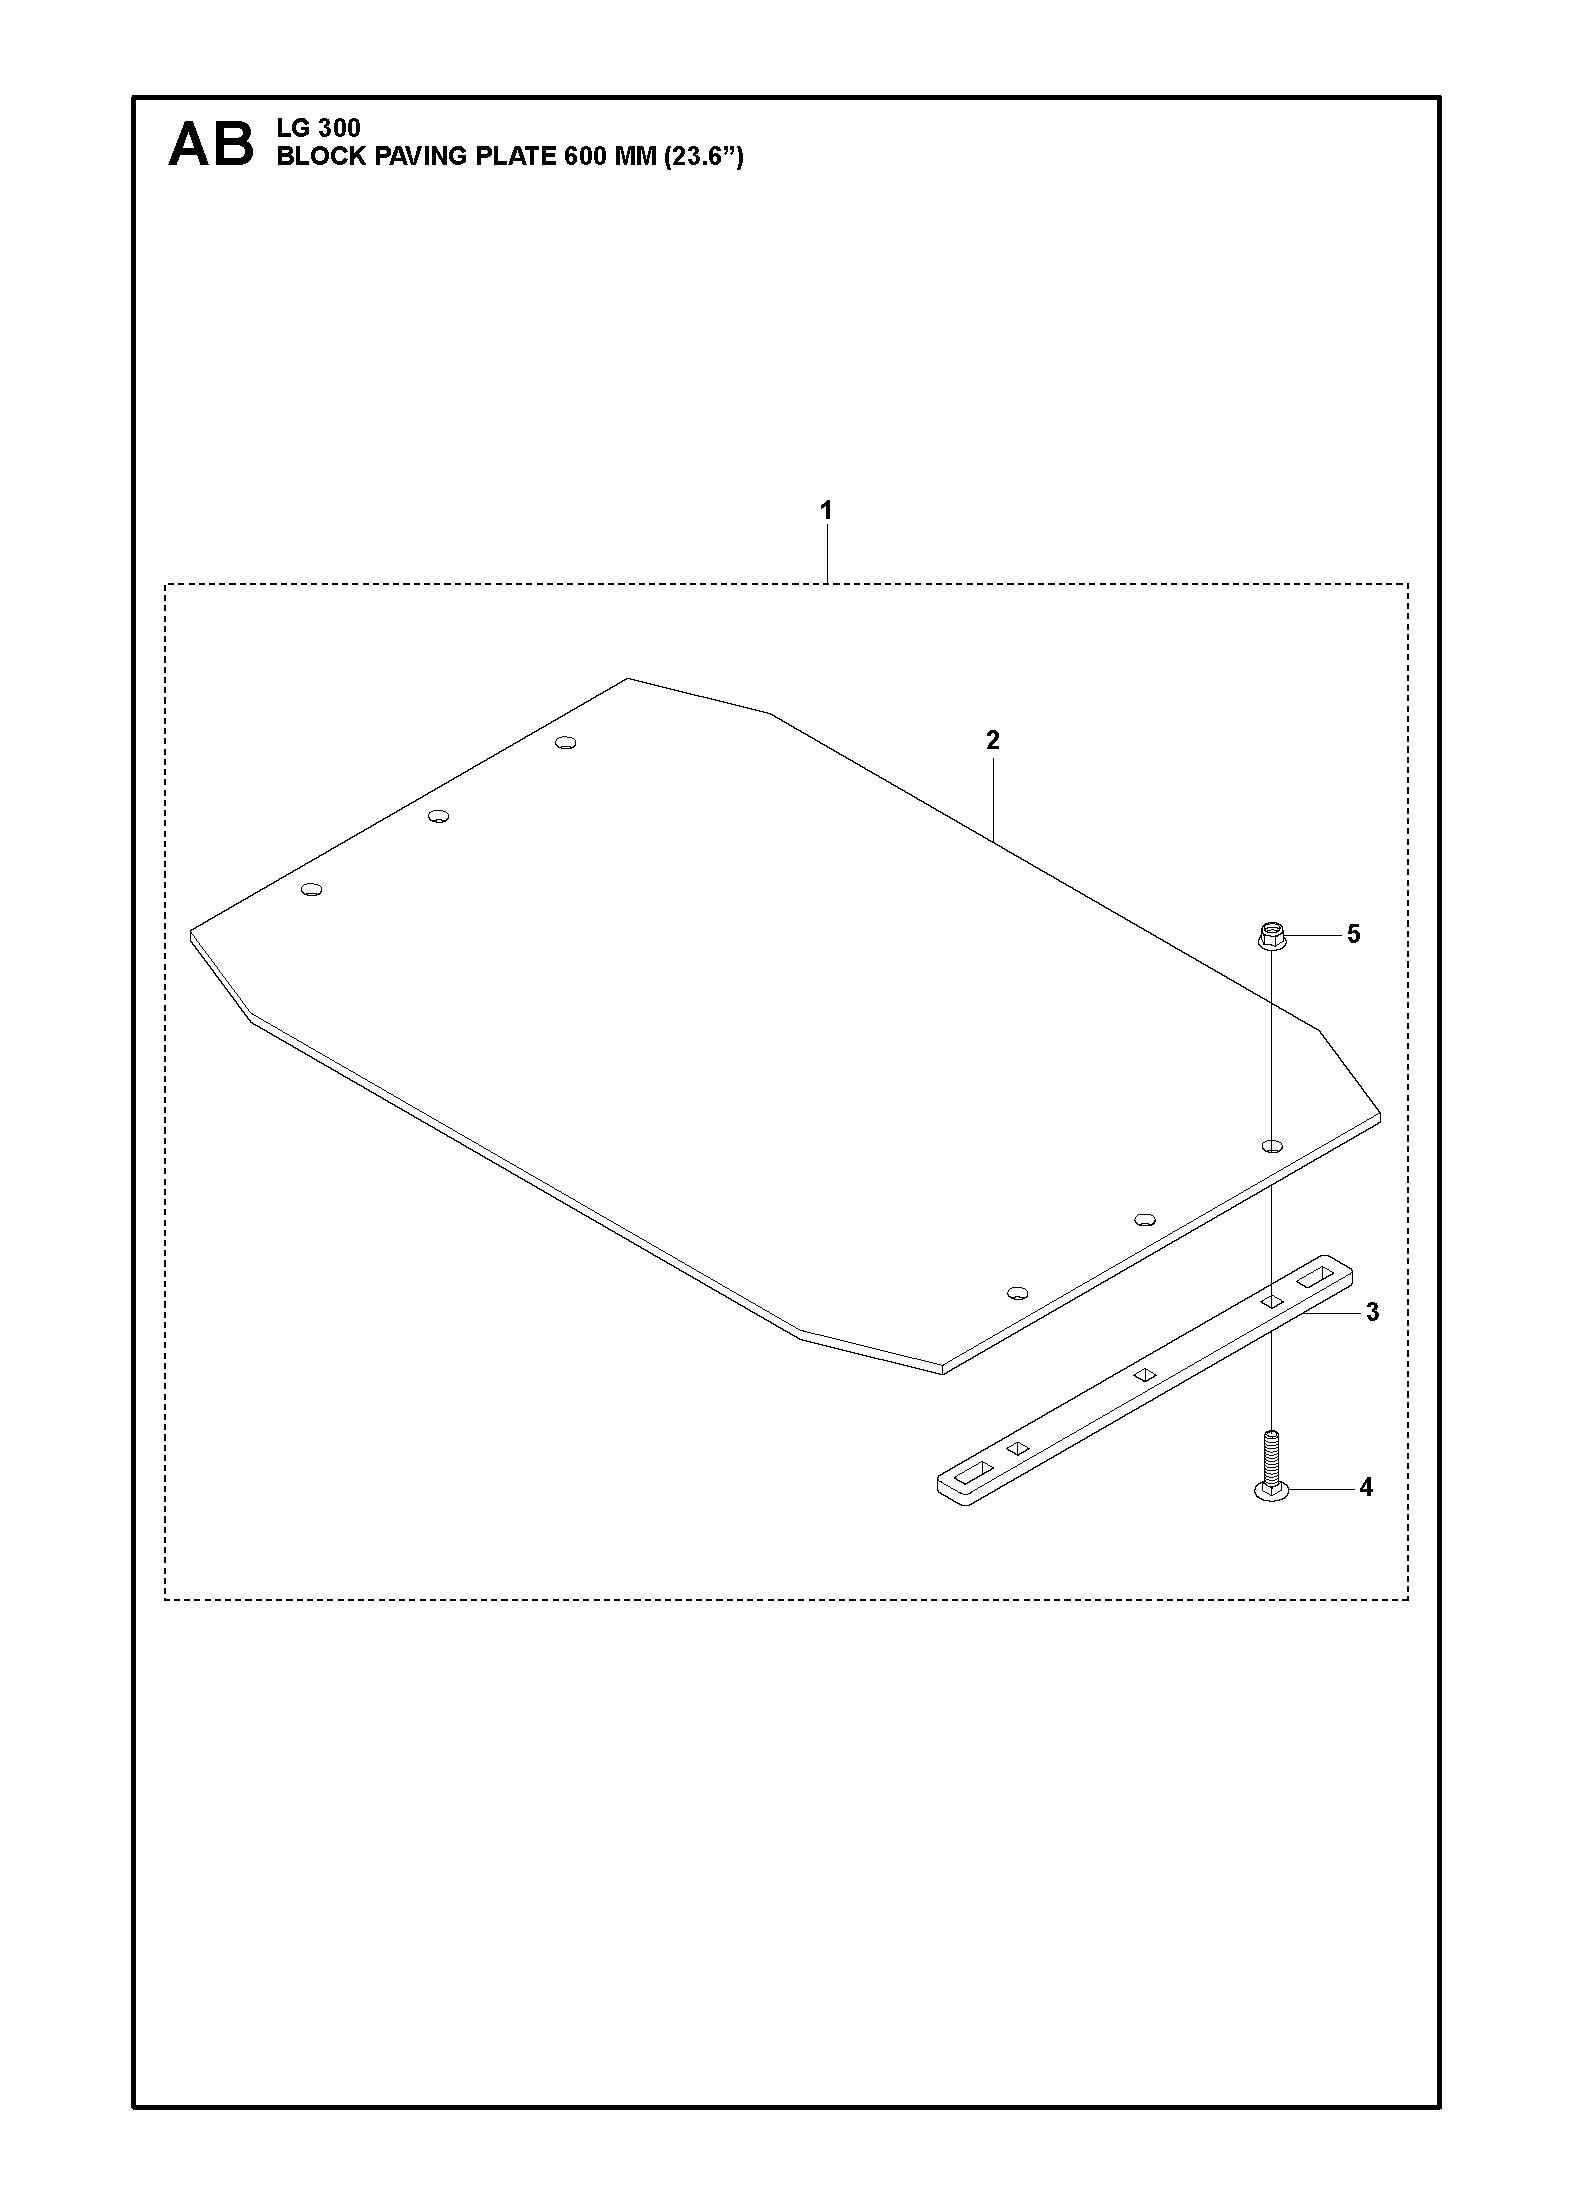 Block paving plate kit 600 mm (23.6") 594830301, 595176701, 594447301, 595067201, 595064701